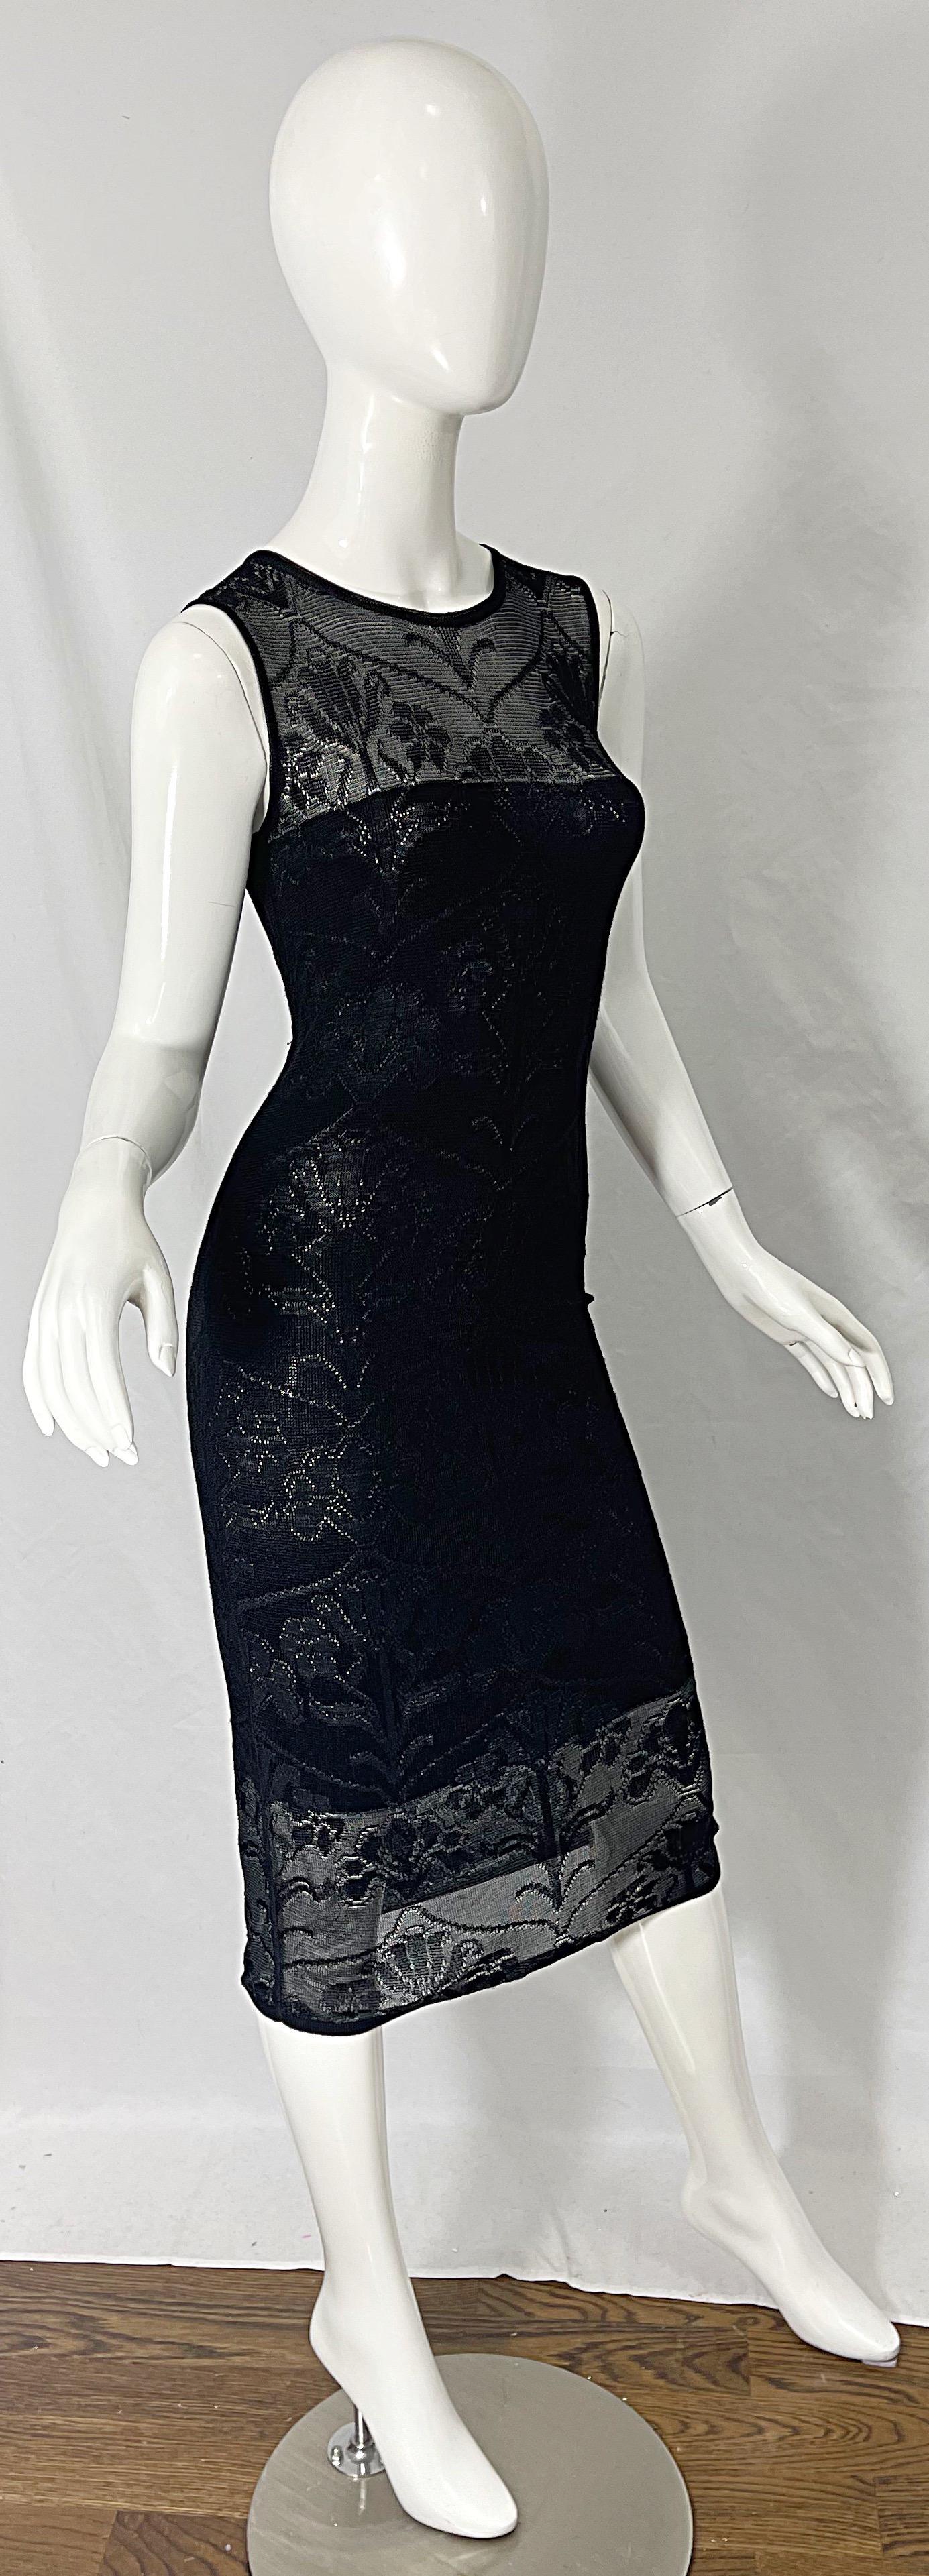 Krizia 1990s Black Crochet Embroidered Semi Sheer Sleeveless Vintage 90s Dress For Sale 2